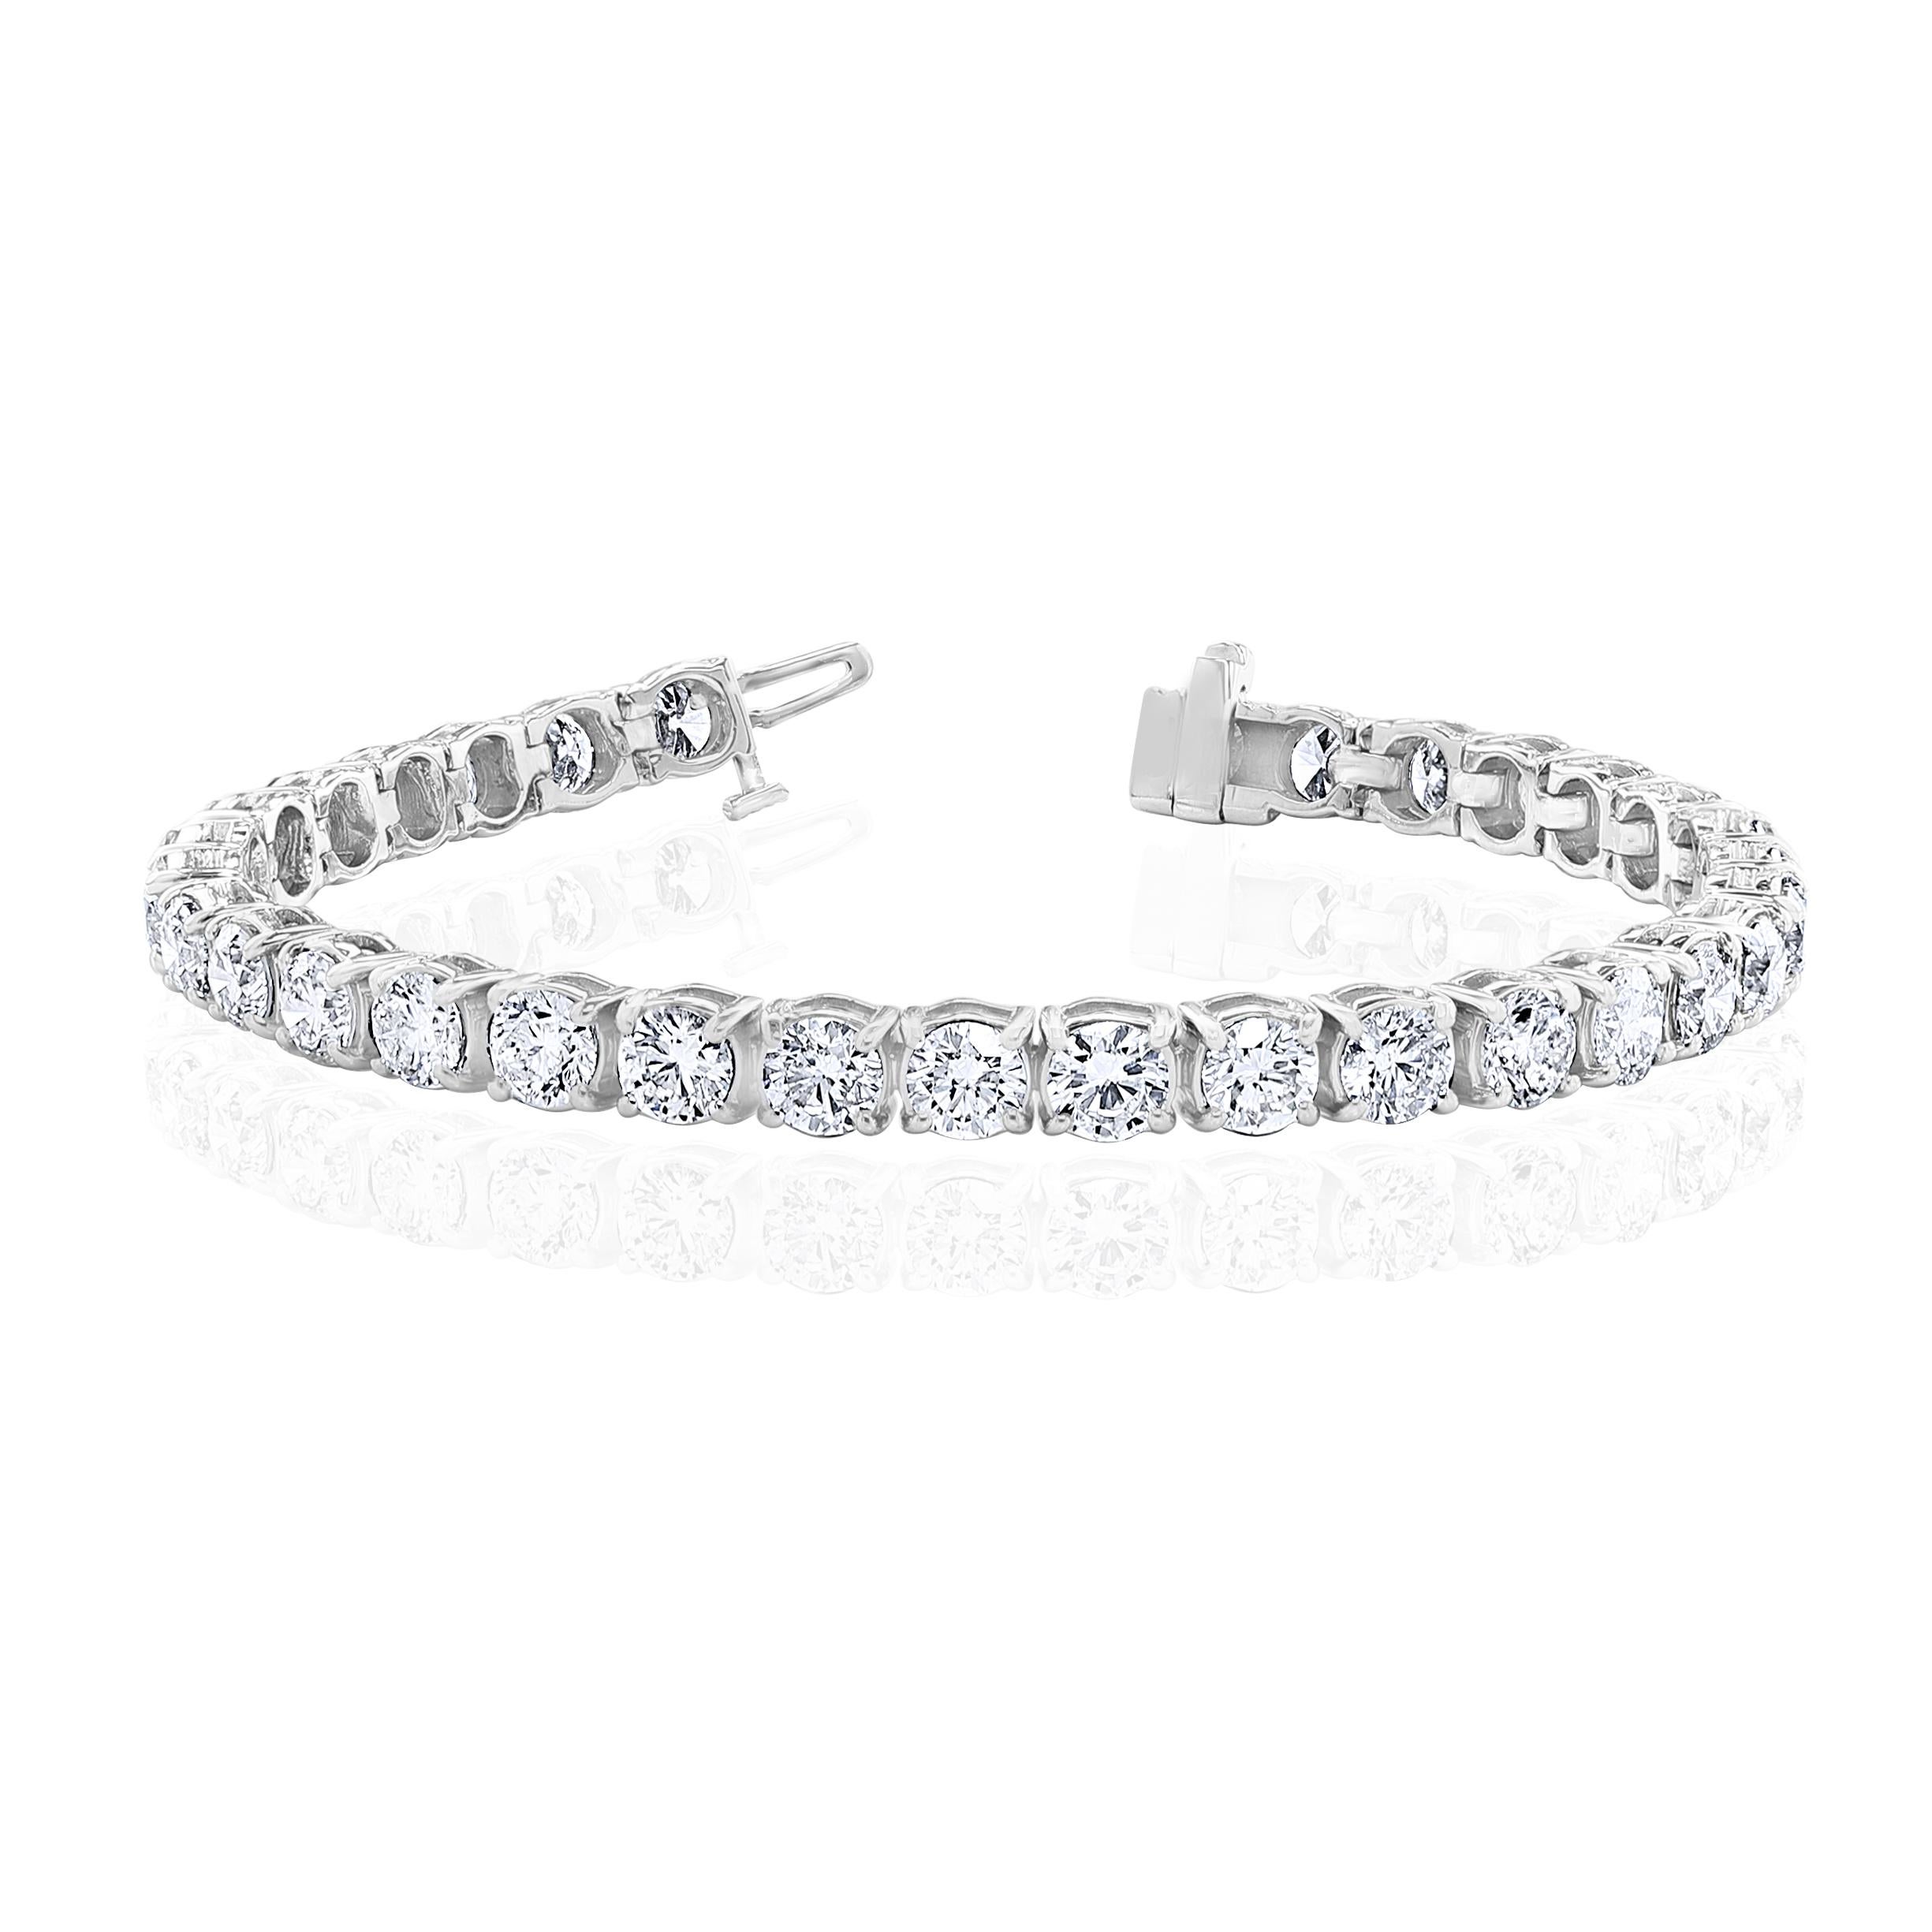 50 diamond tennis bracelet